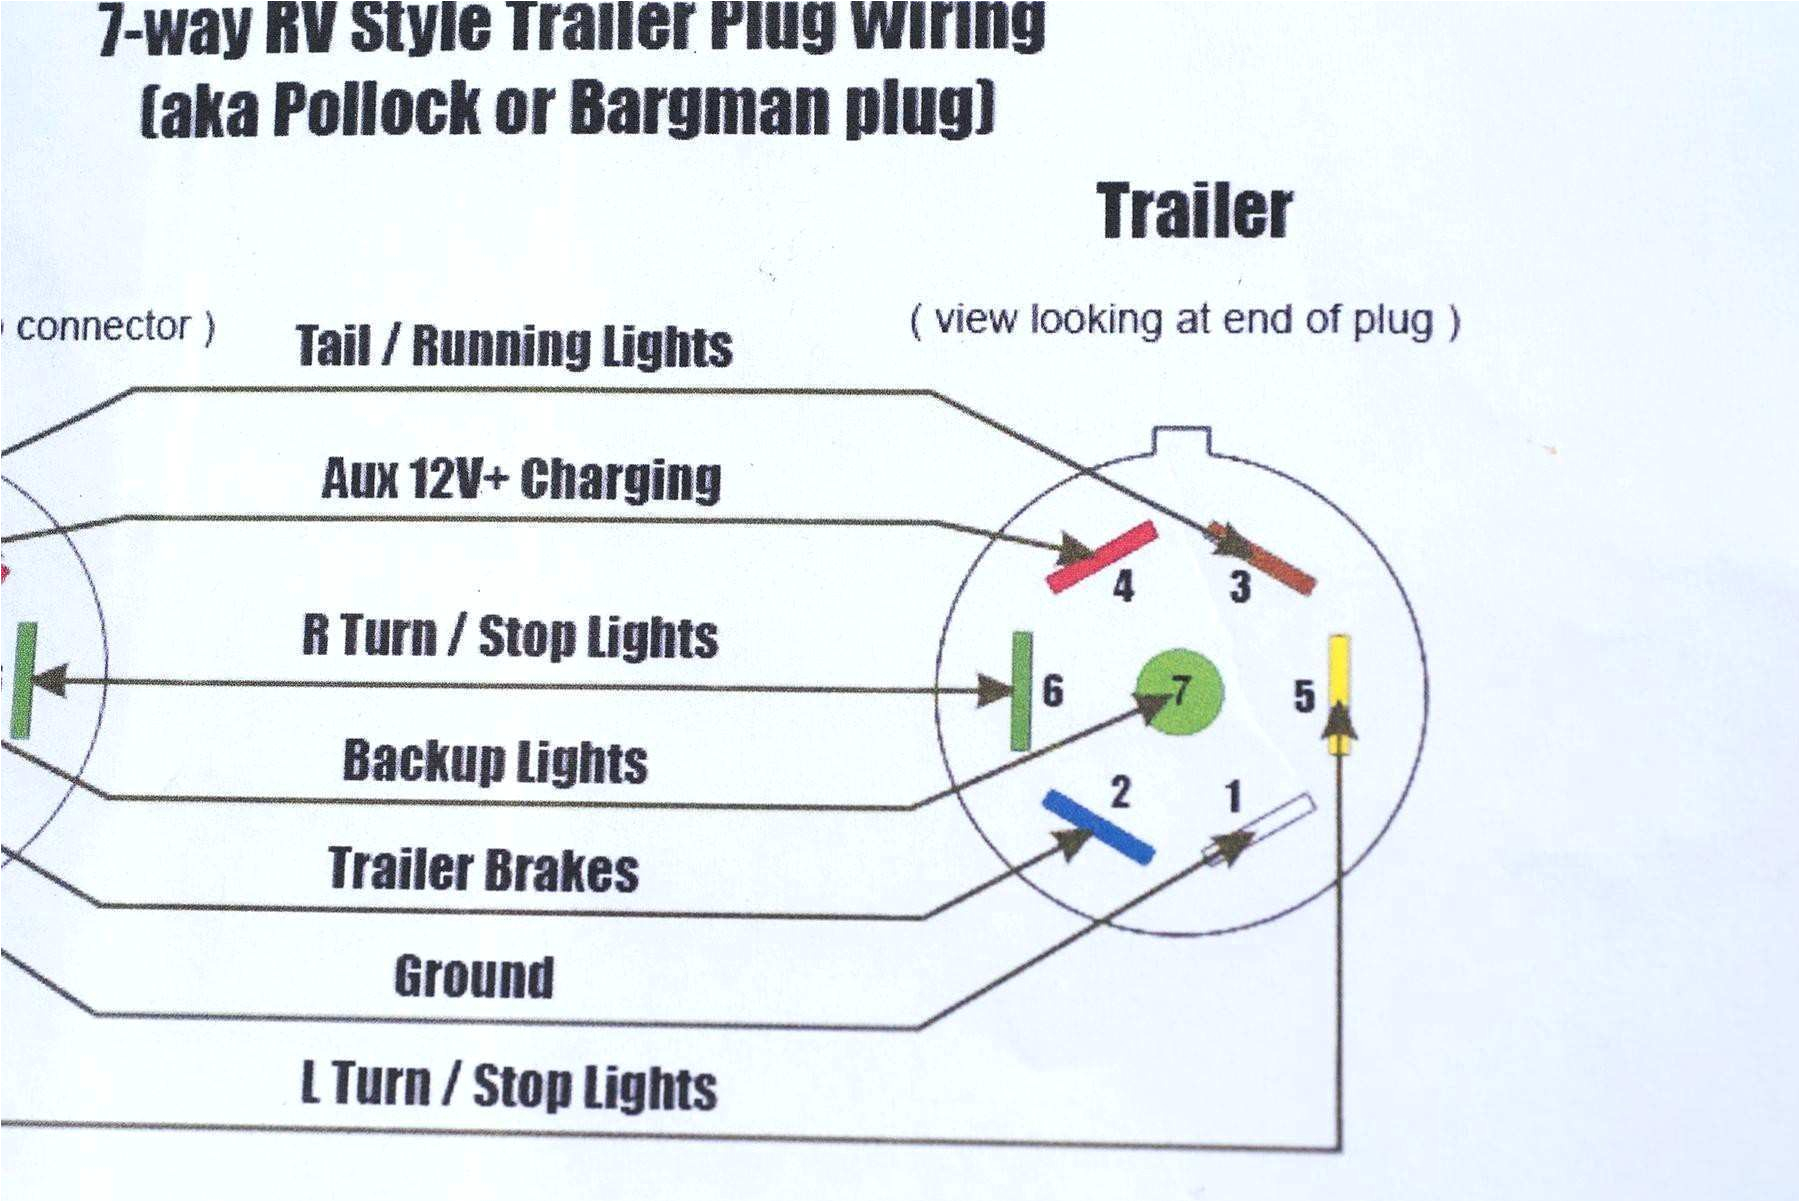 hoppy trailer wiring gm wiring diagram post hoppy trailer wiring gm